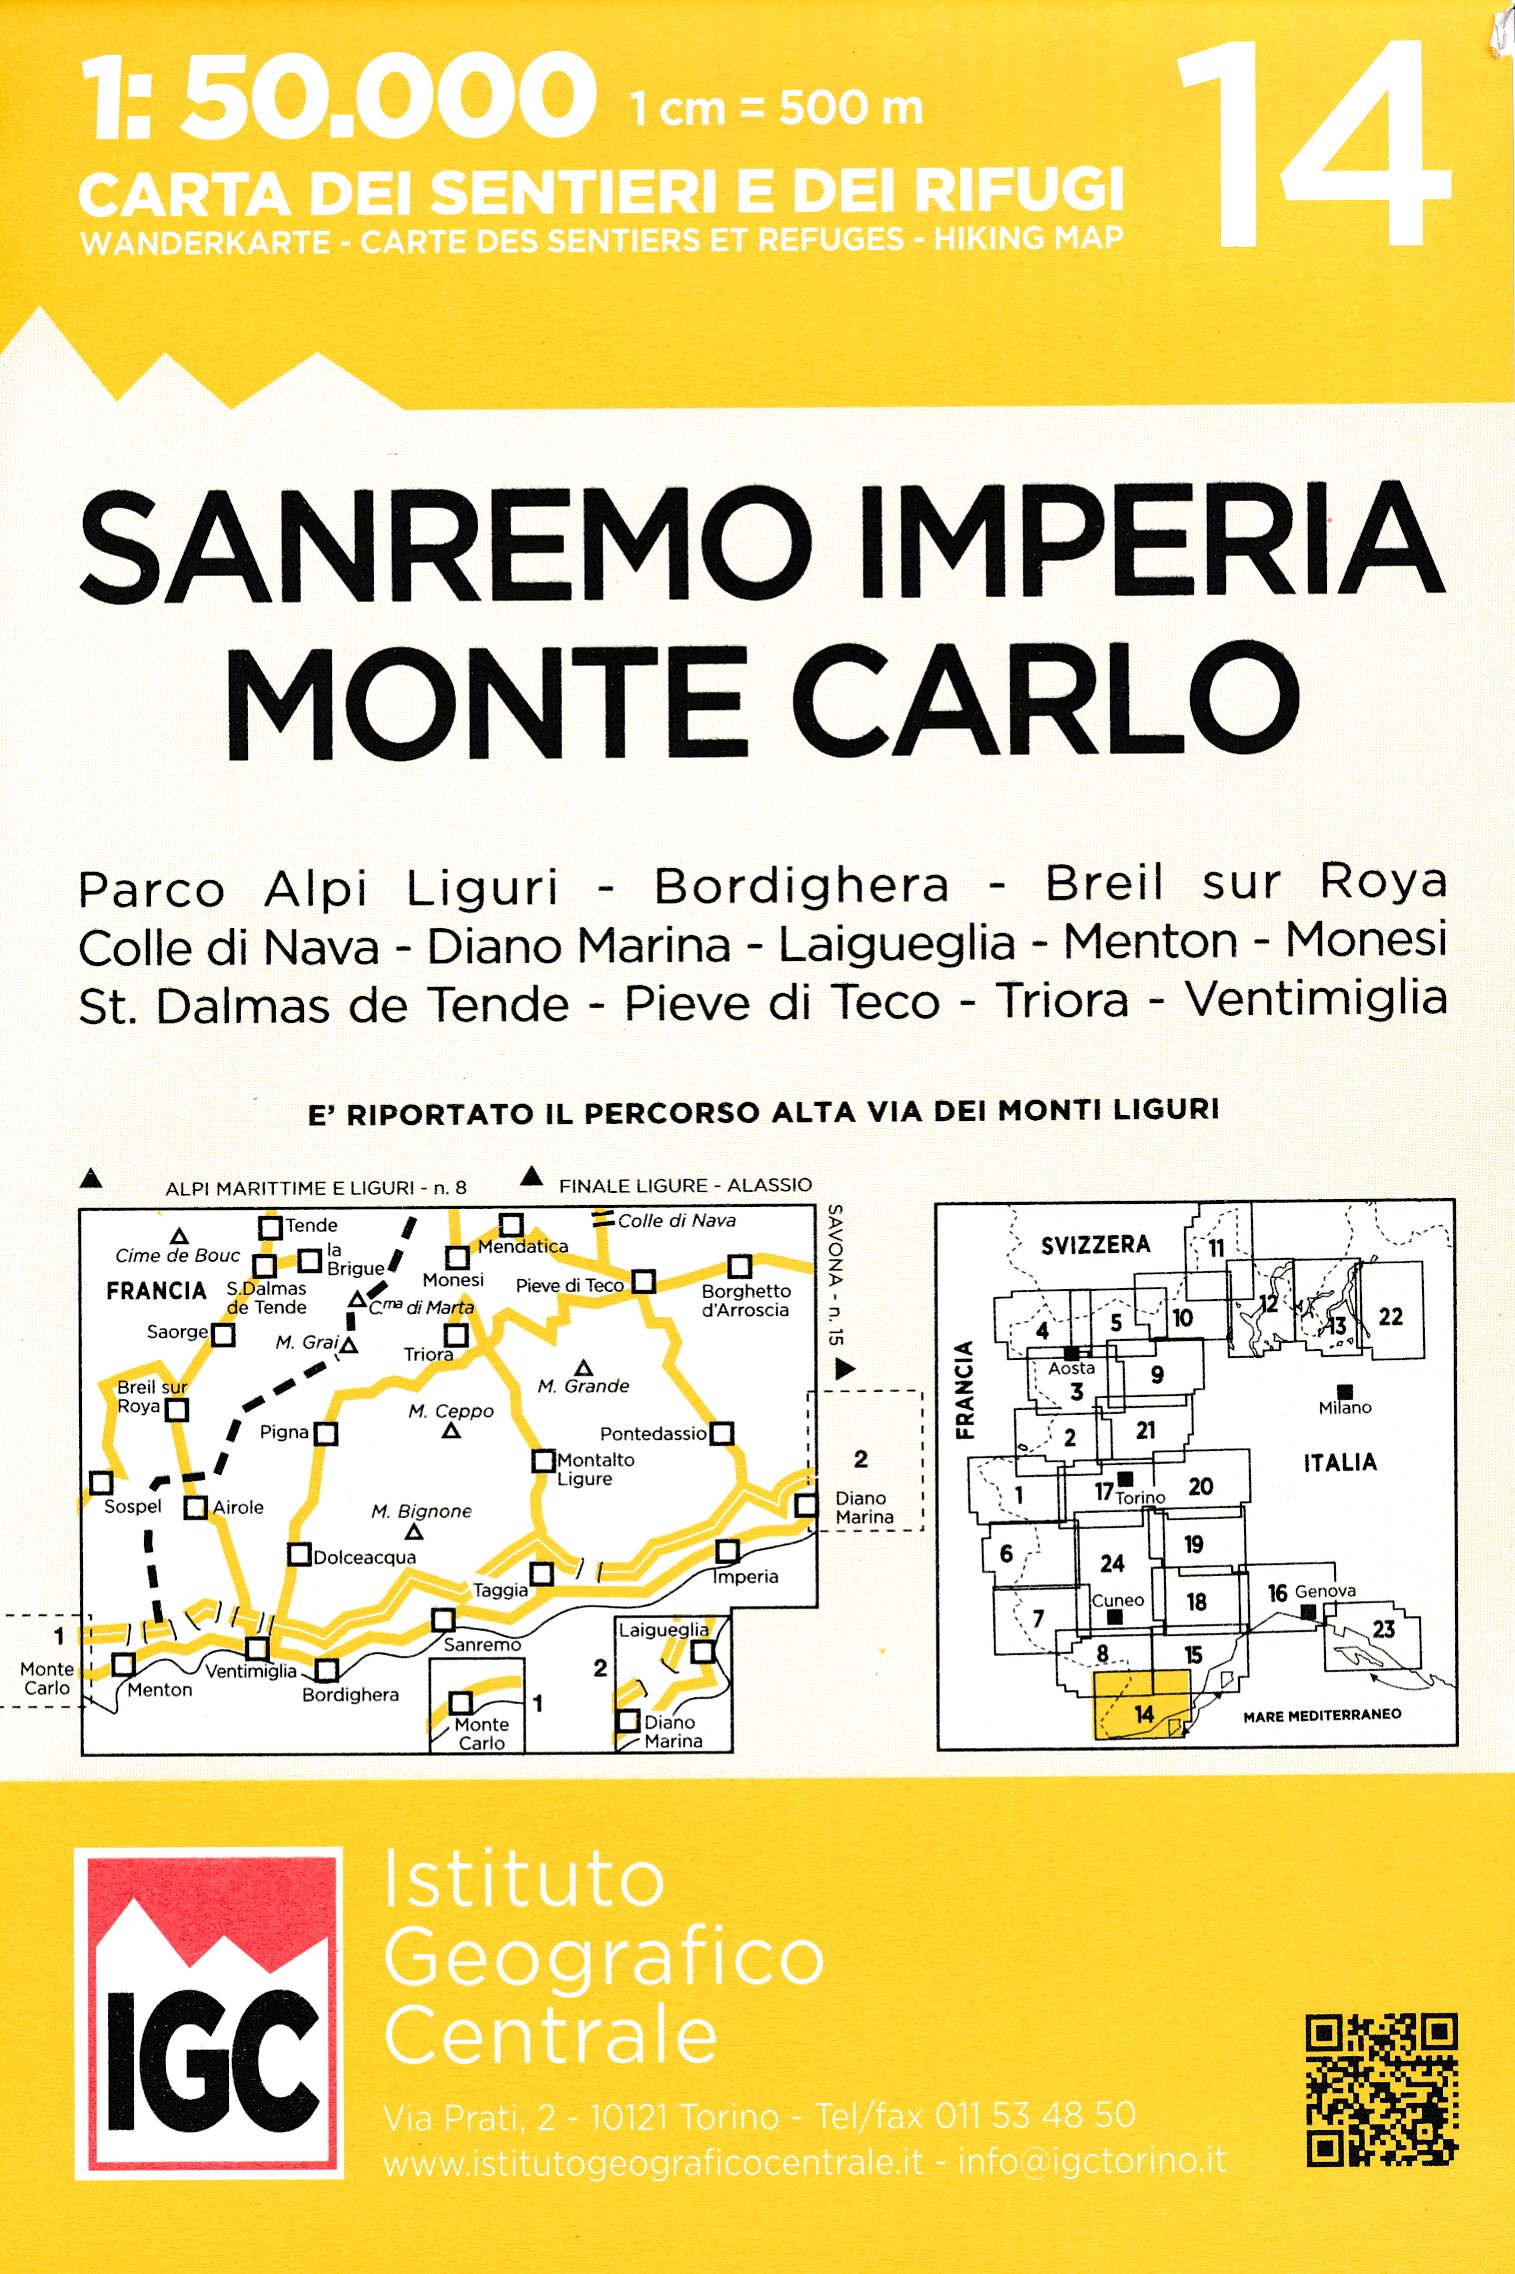 Online bestellen: Wandelkaart 14 San Remo, imperia Monte Carlo | IGC - Istituto Geografico Centrale